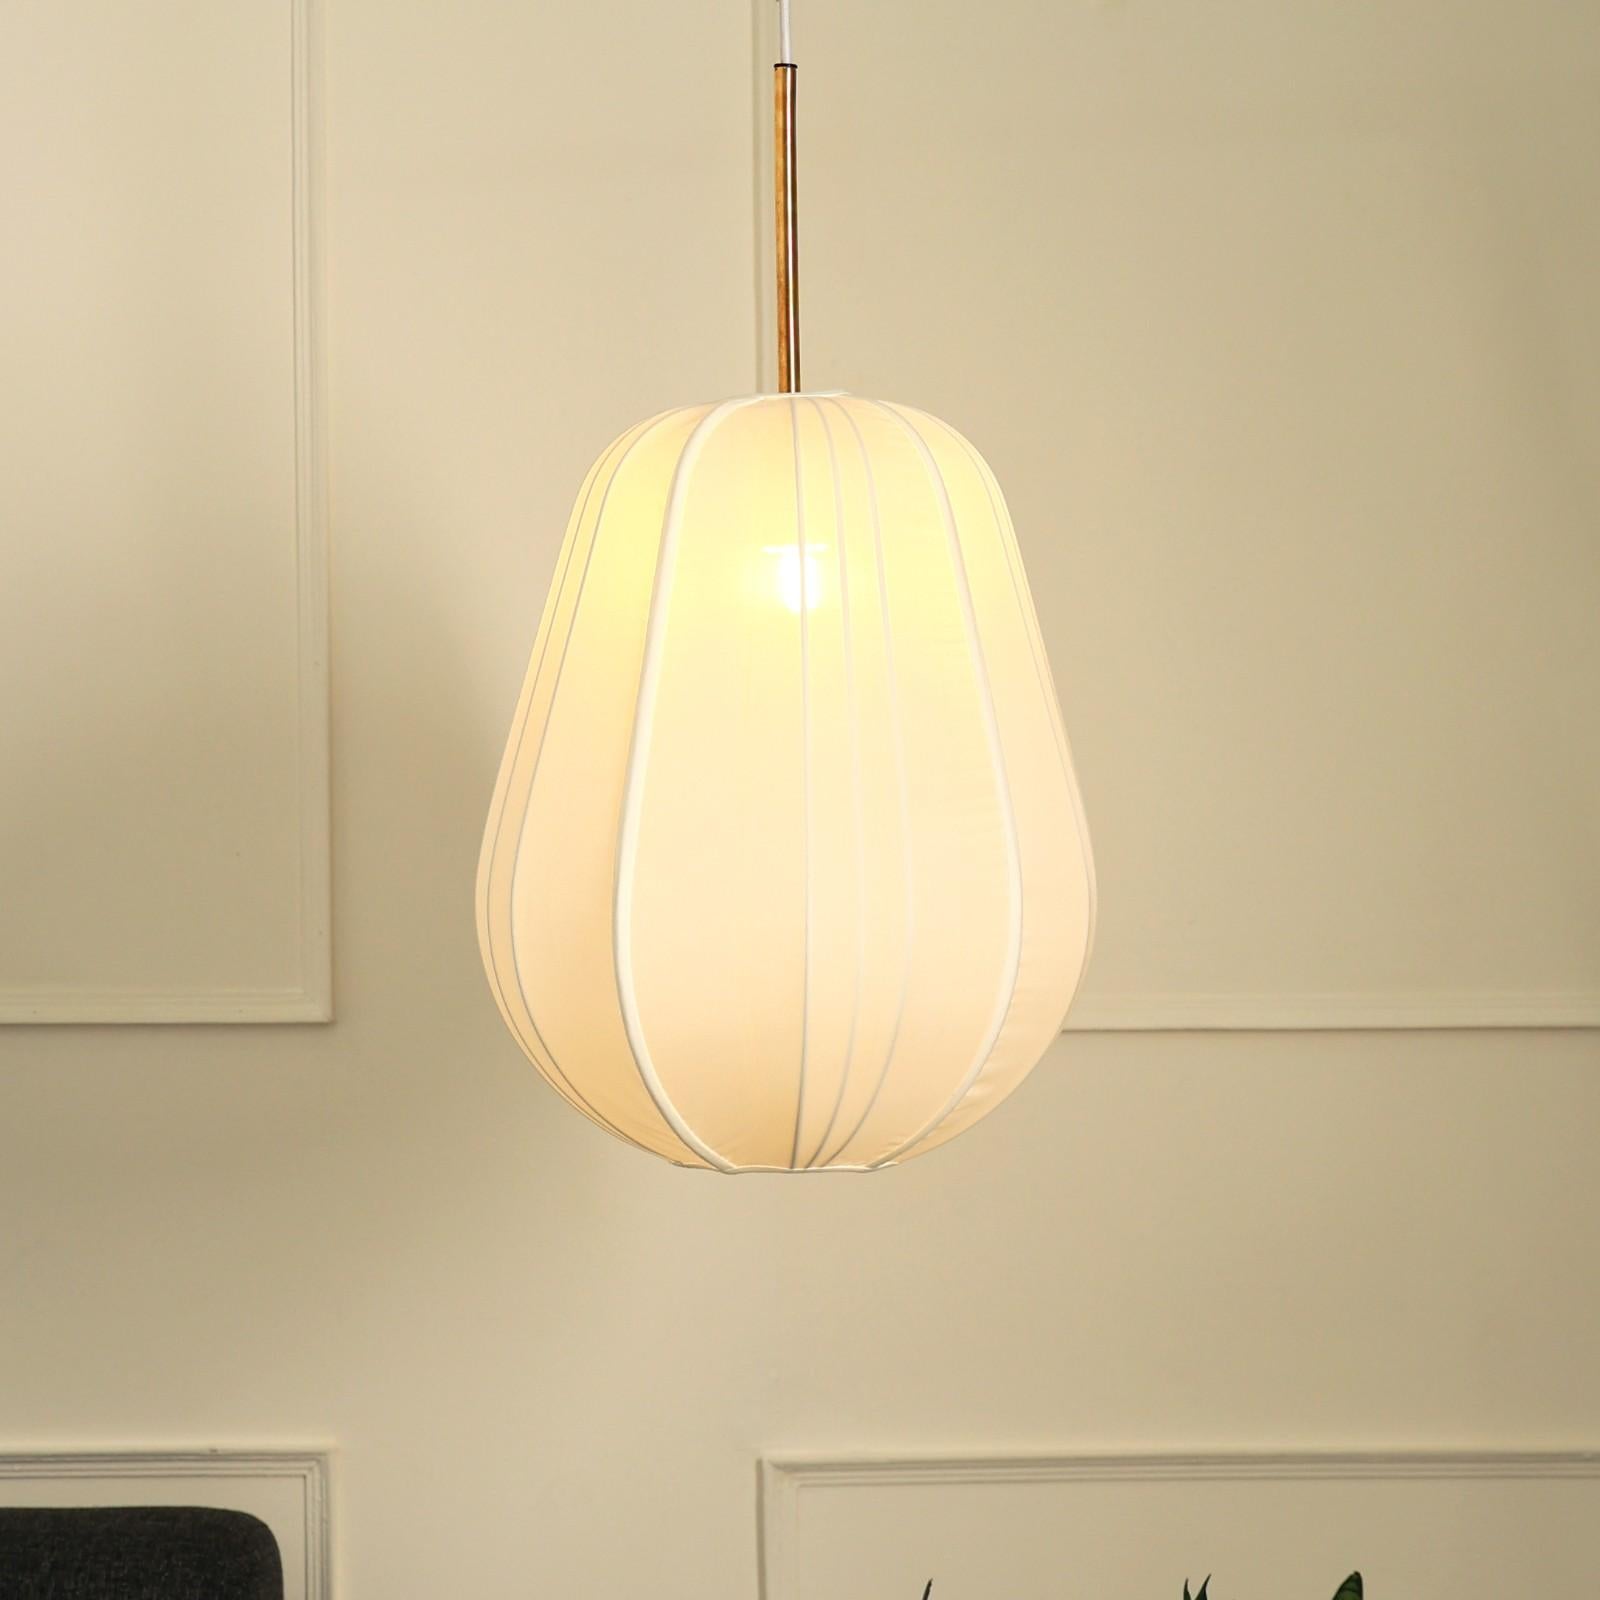 Luxe Collection - Rome Lamp  - Premium Chiffon Fabric, Metallic Spacer, Soft Warm Glow, Mood Enhancement Lighting